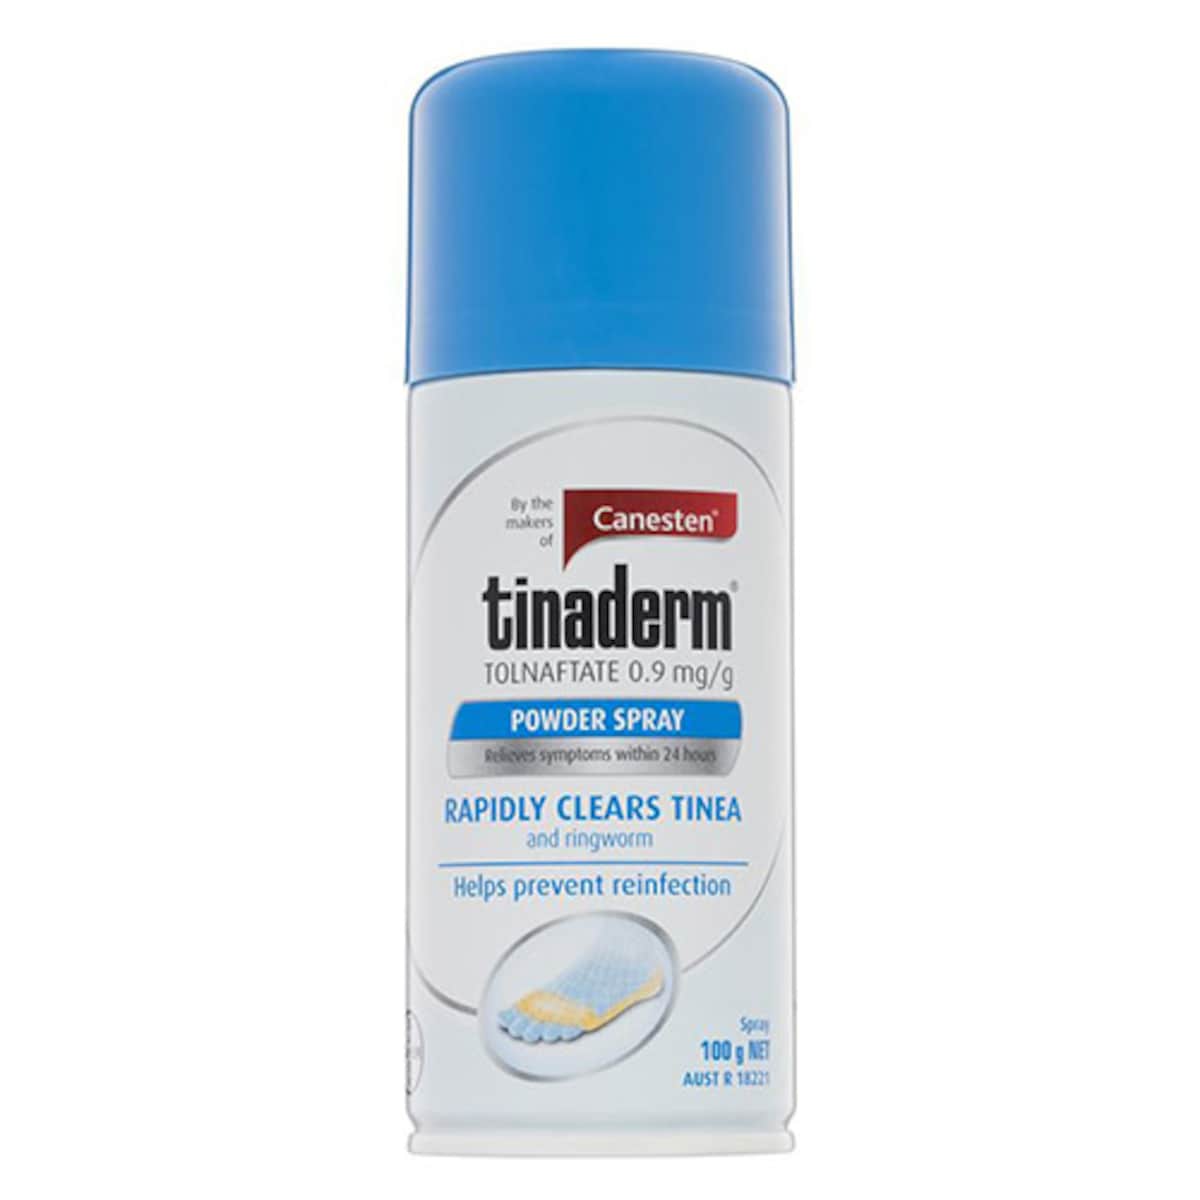 Canesten Tinaderm Powder Spray For Tinea & Ringworm 100g